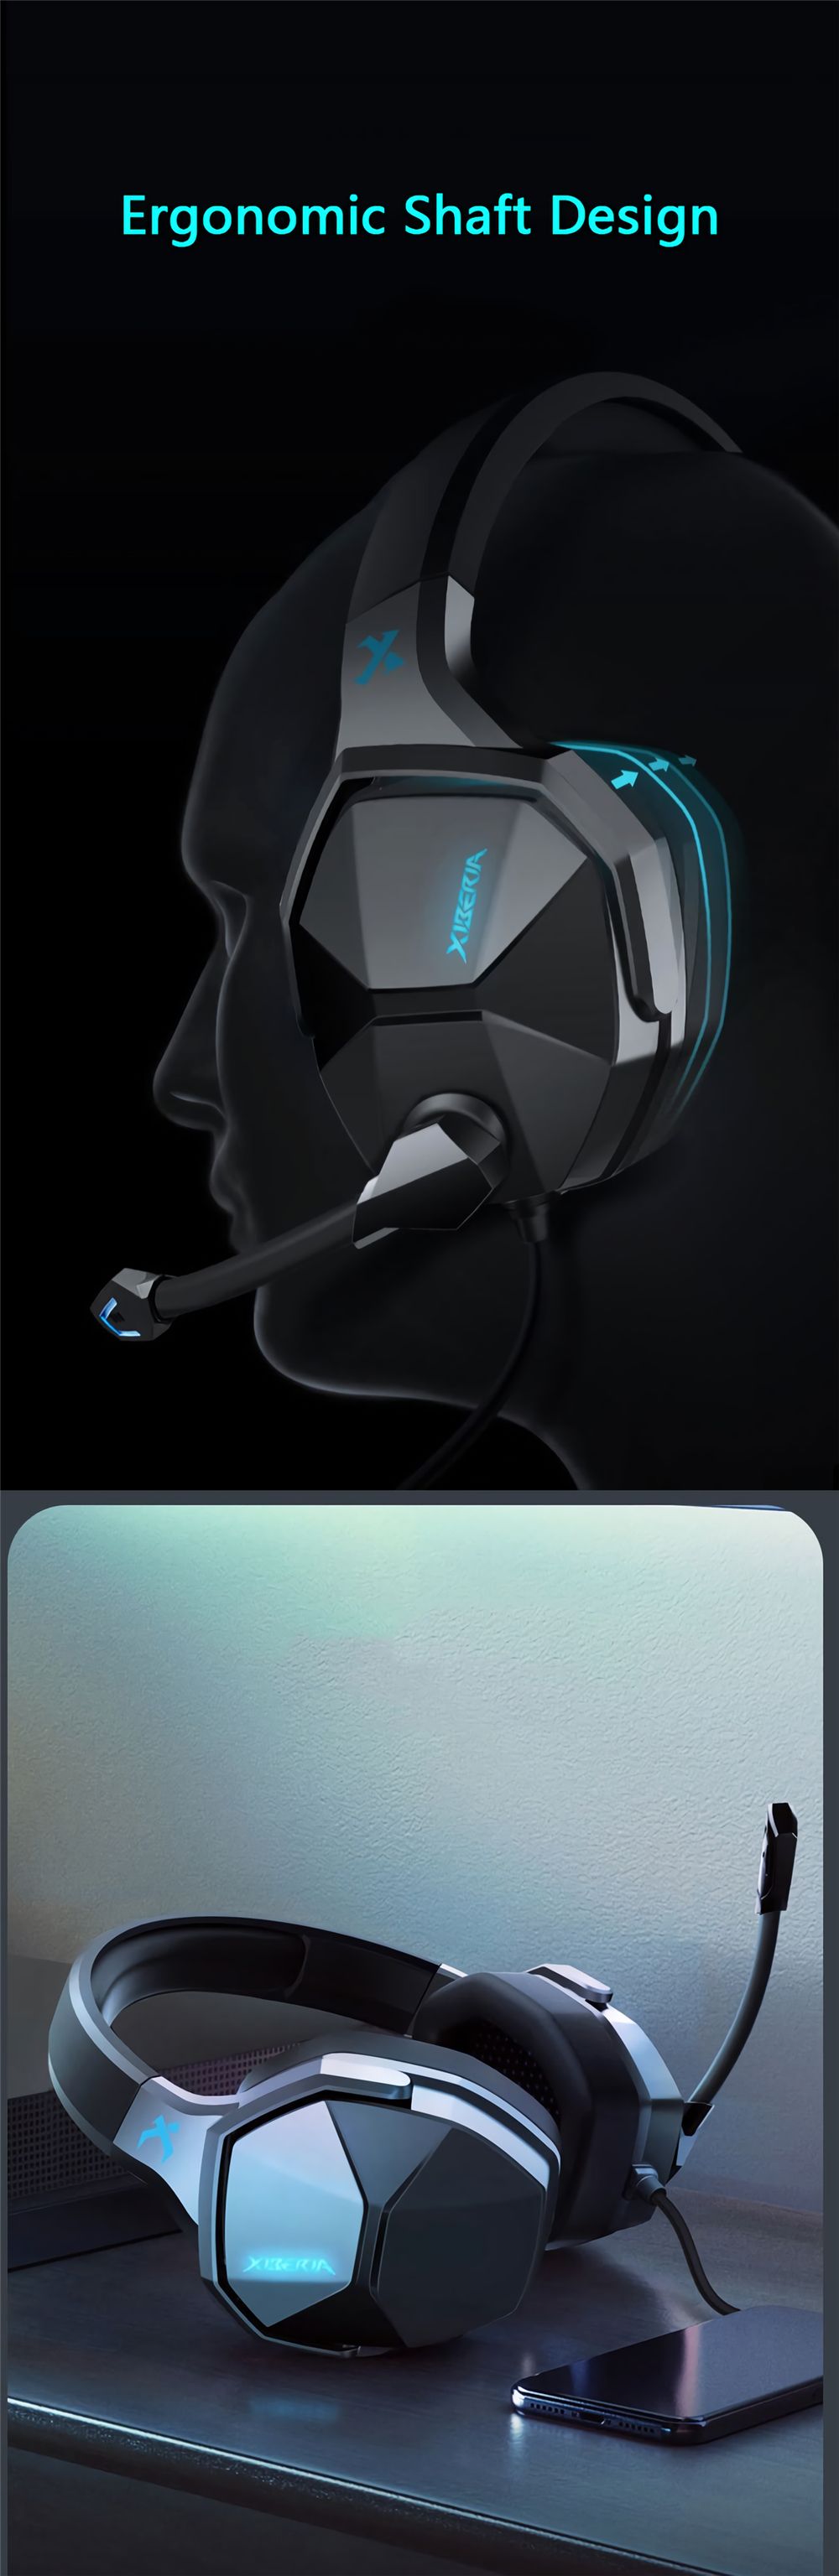 XIBERIA-V13-Gaming-Headset-USB-71-Channel-Ergonomic-Shaft-Professional-Headphone-with-Mic-for-Comput-1708440